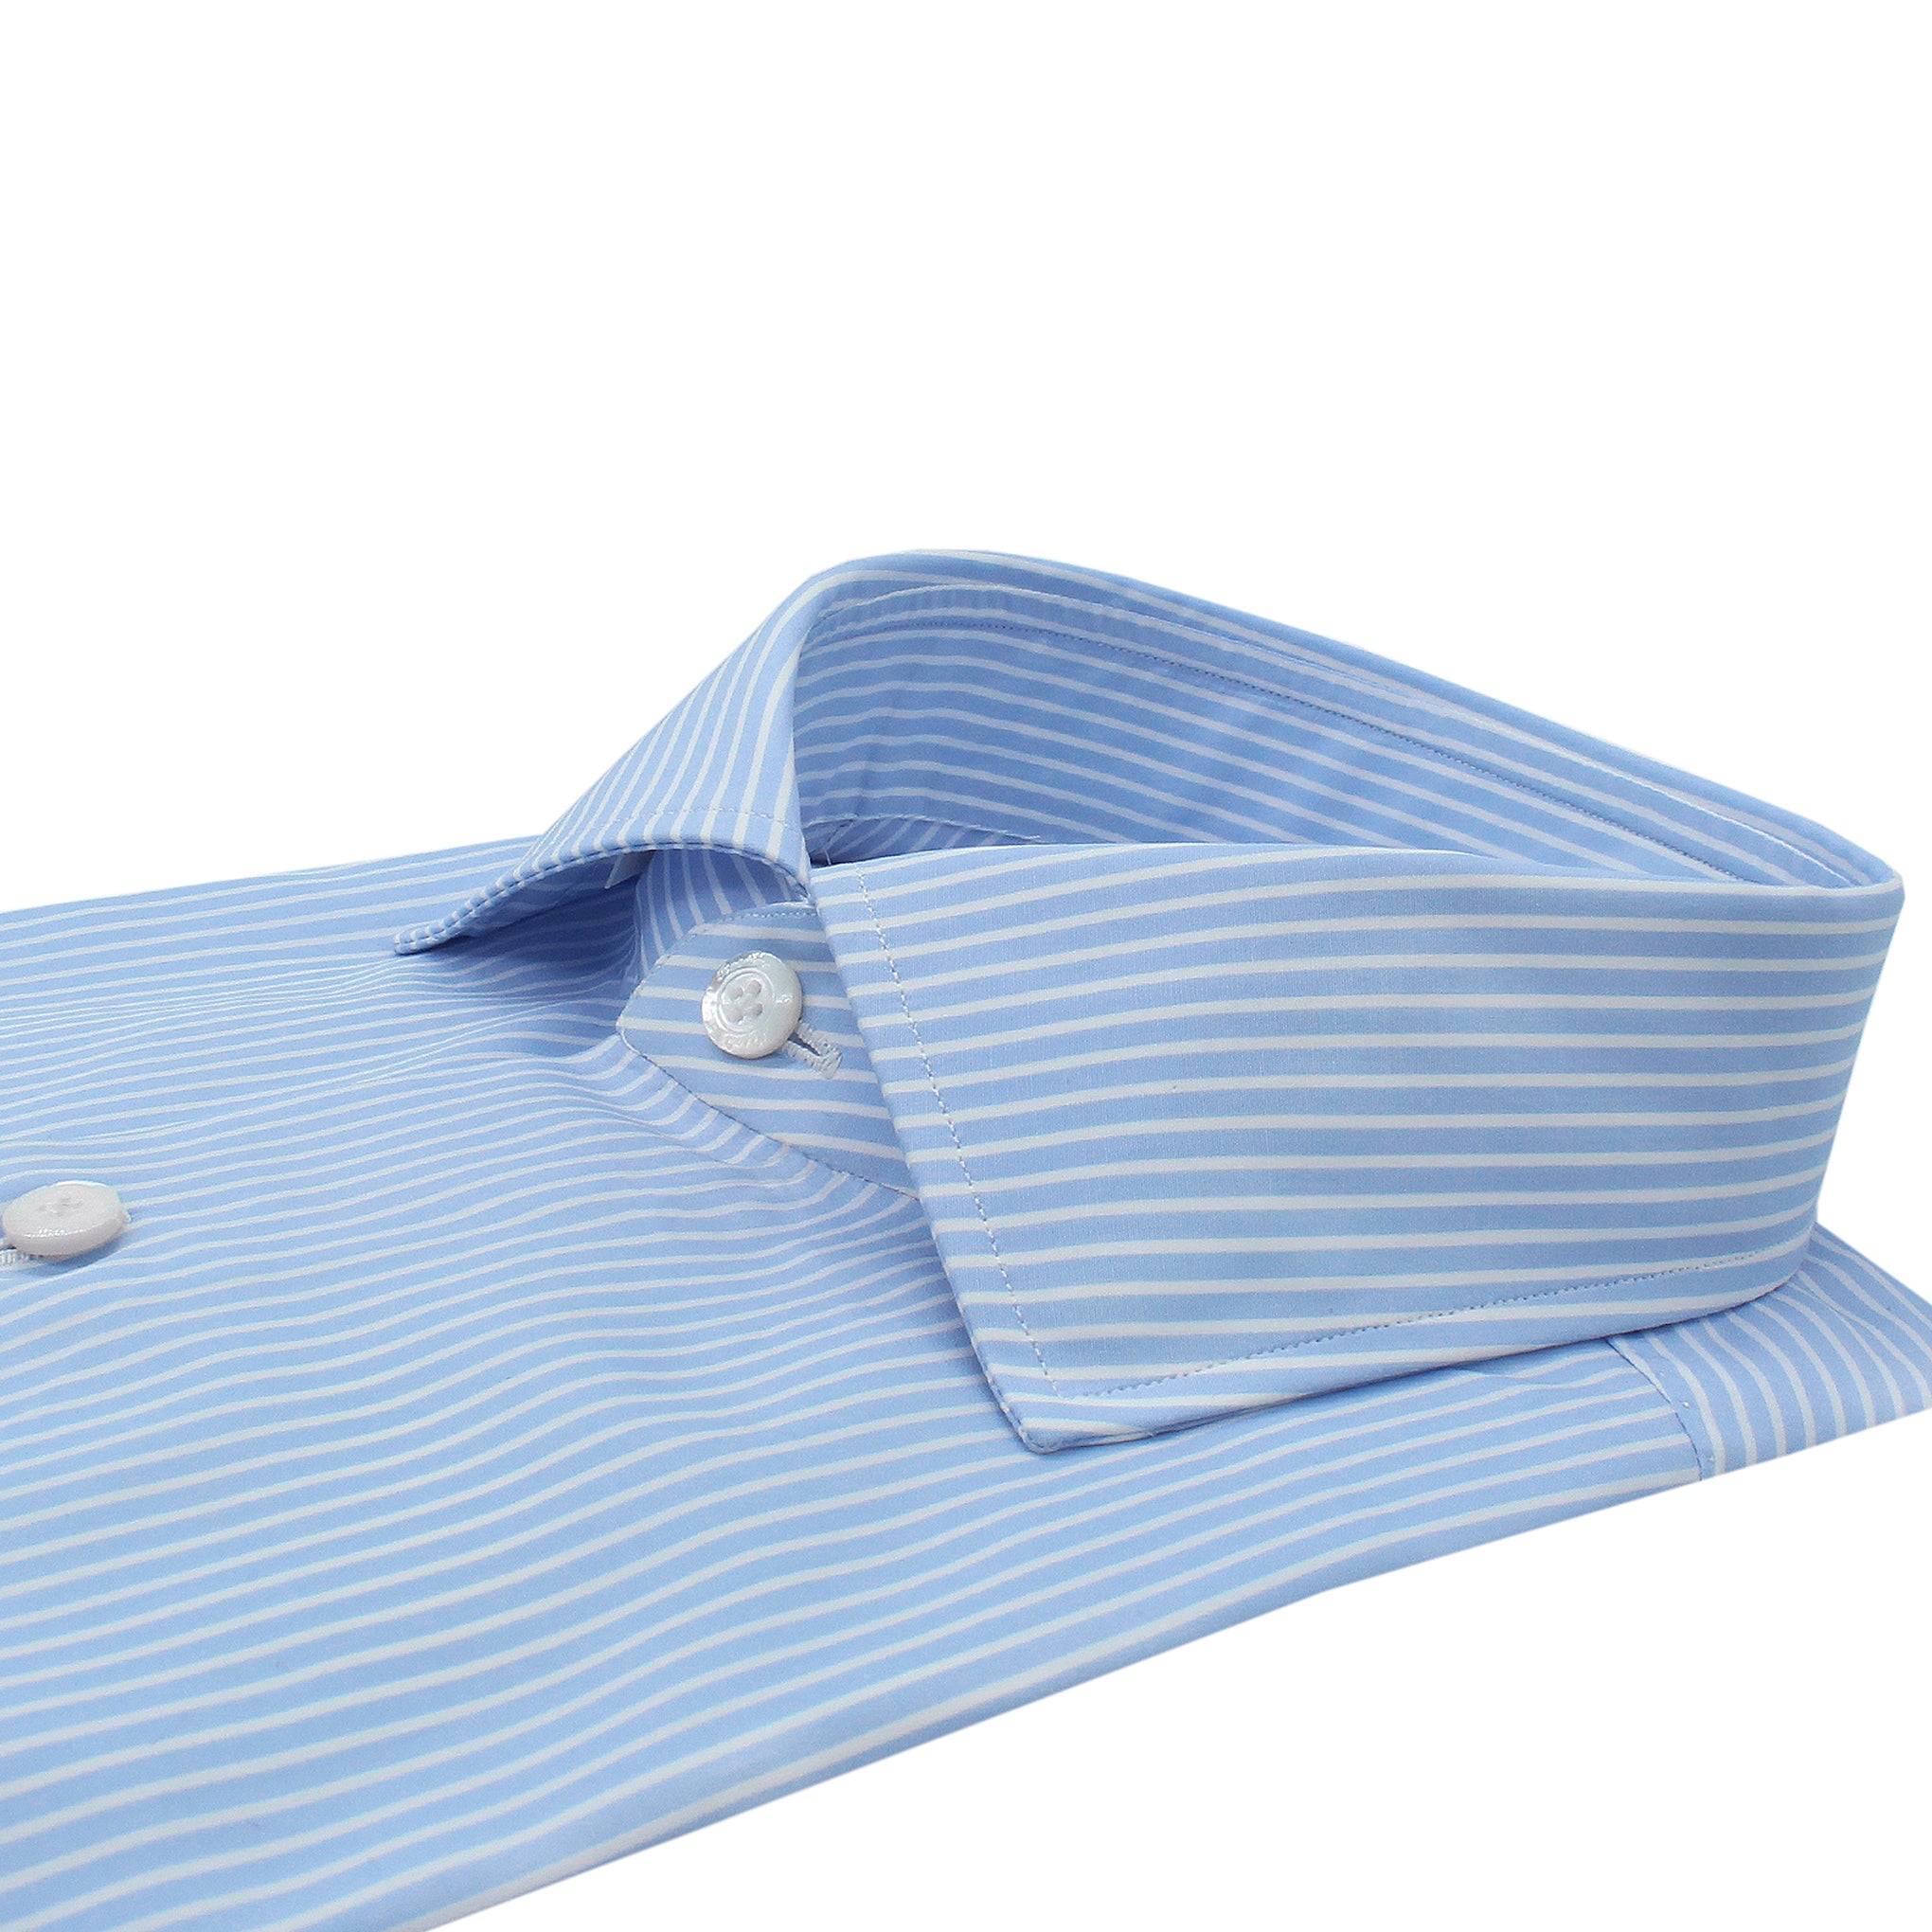 Dress shirt Napoli 170 a due striped light blue fabric Finamore 1925